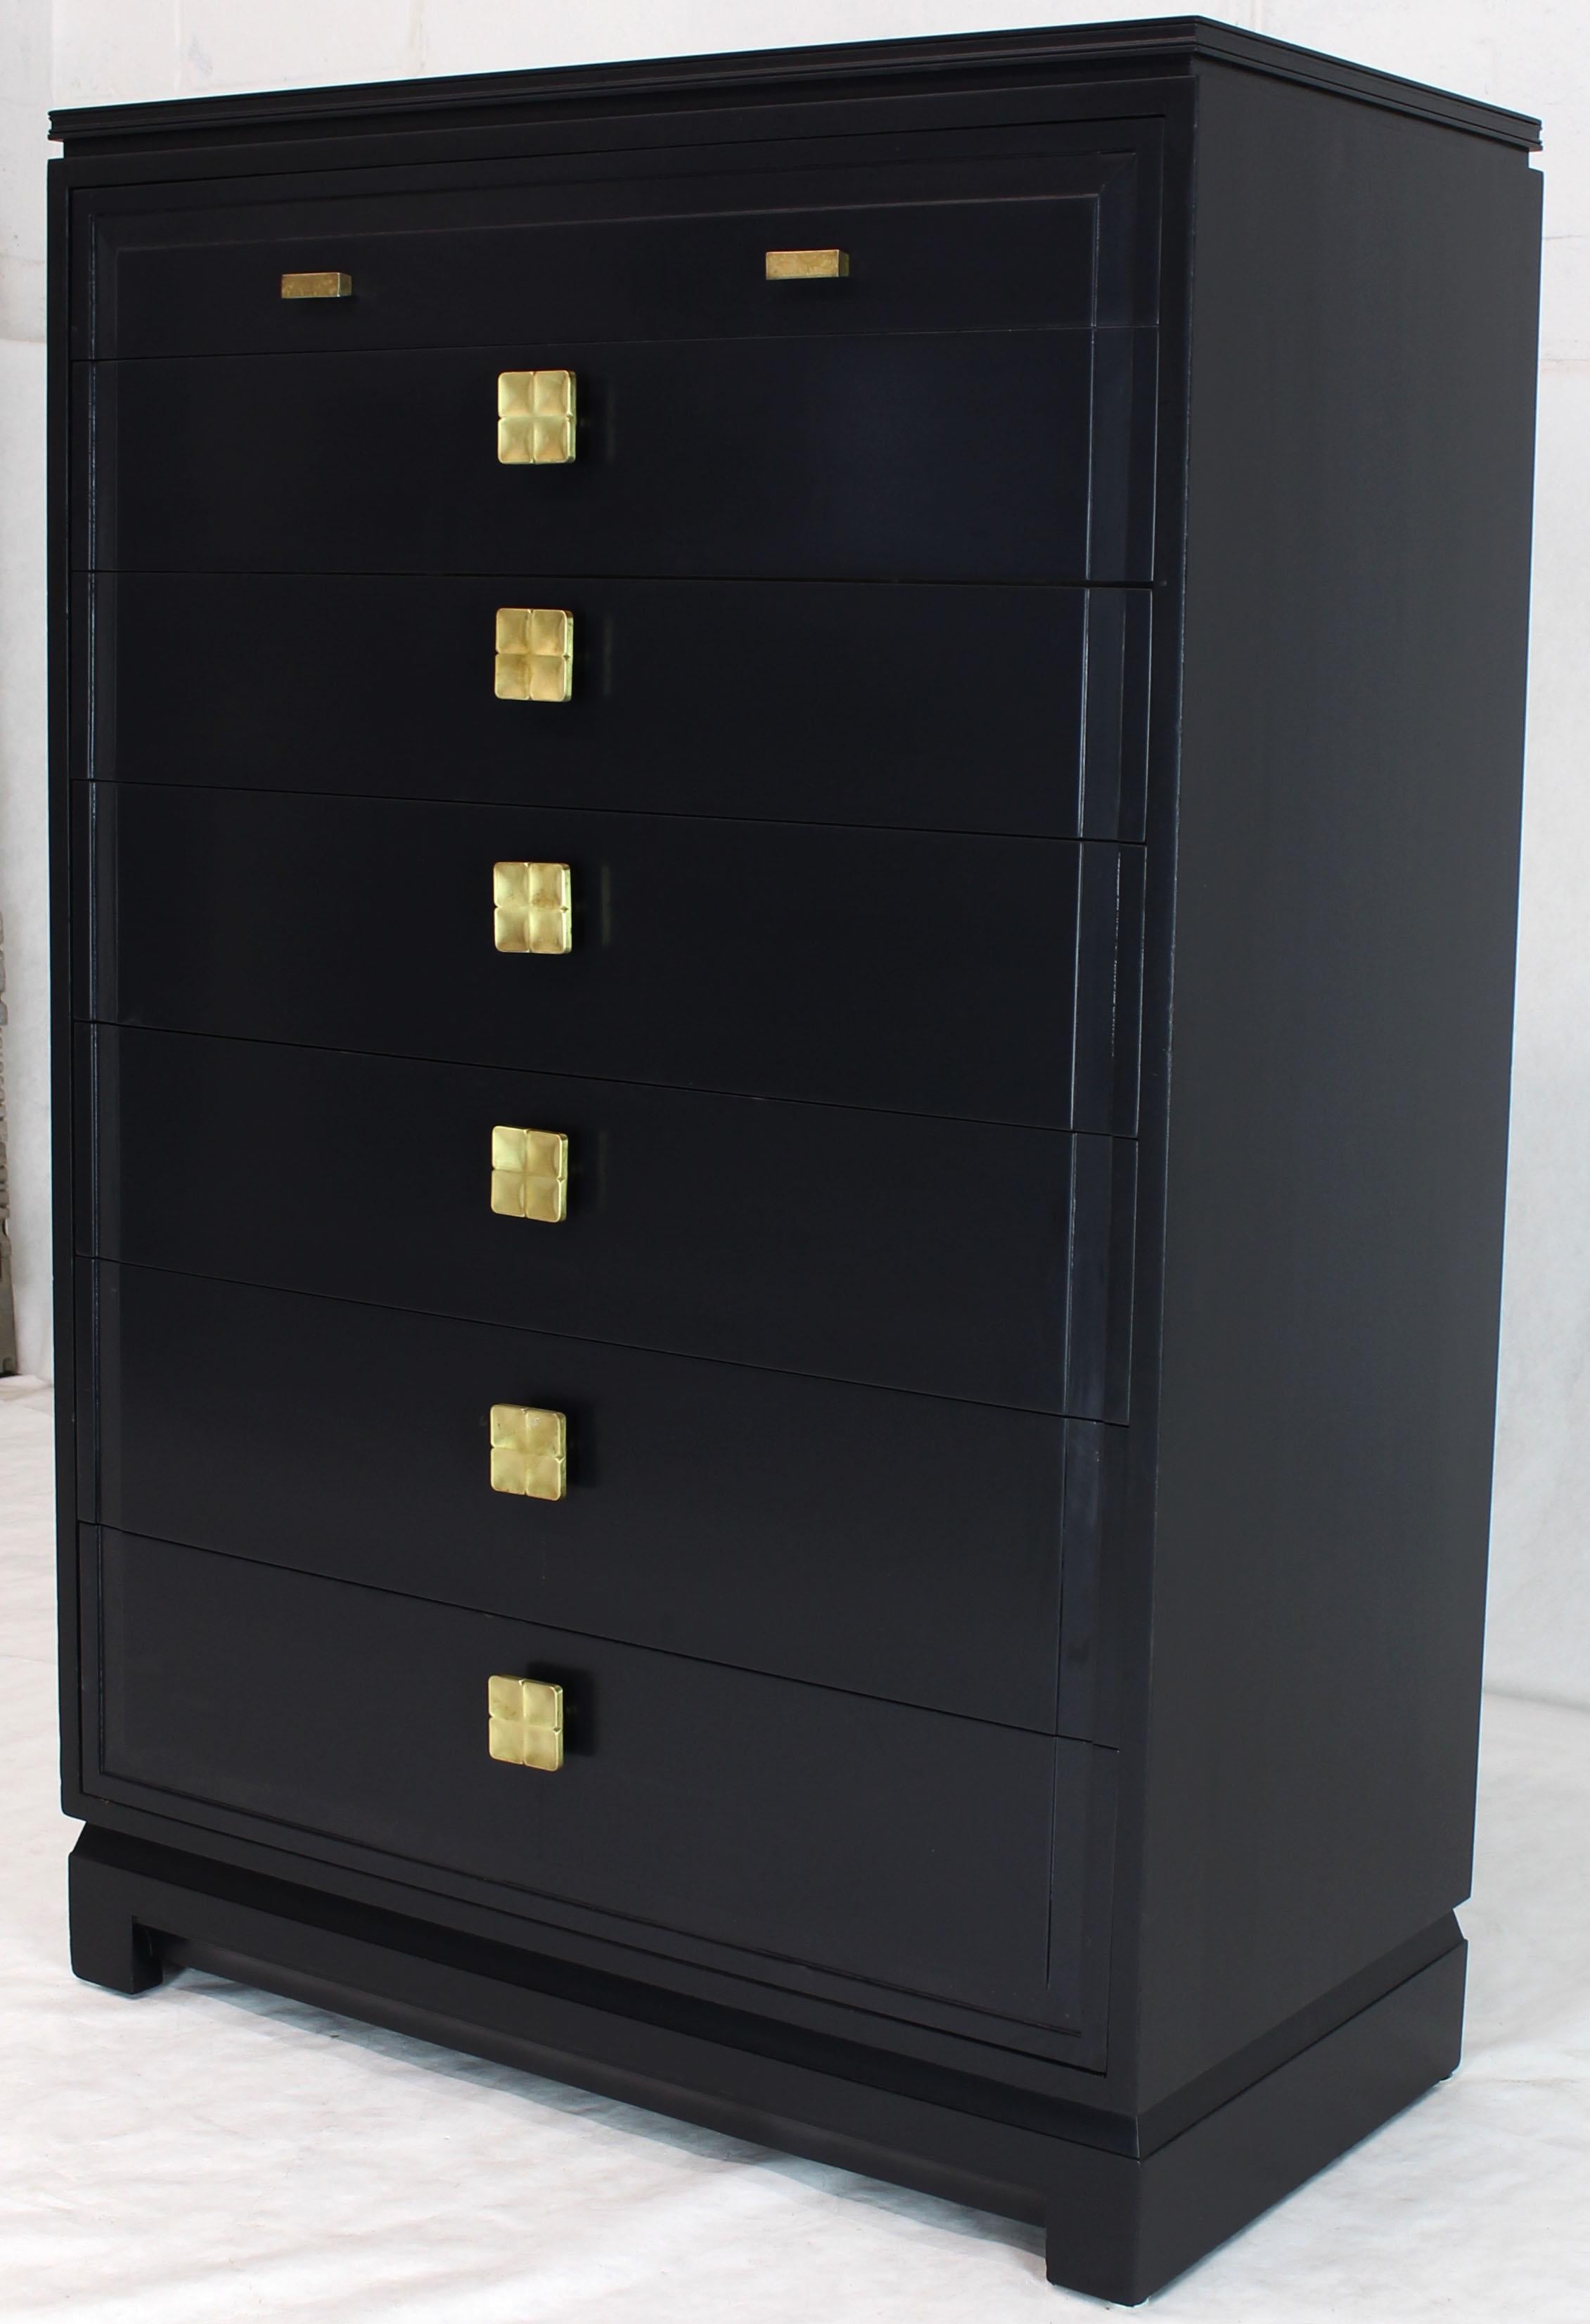 American Black Lacquer Tall Decorative Brass Hardware Pulls High Chest Dresser